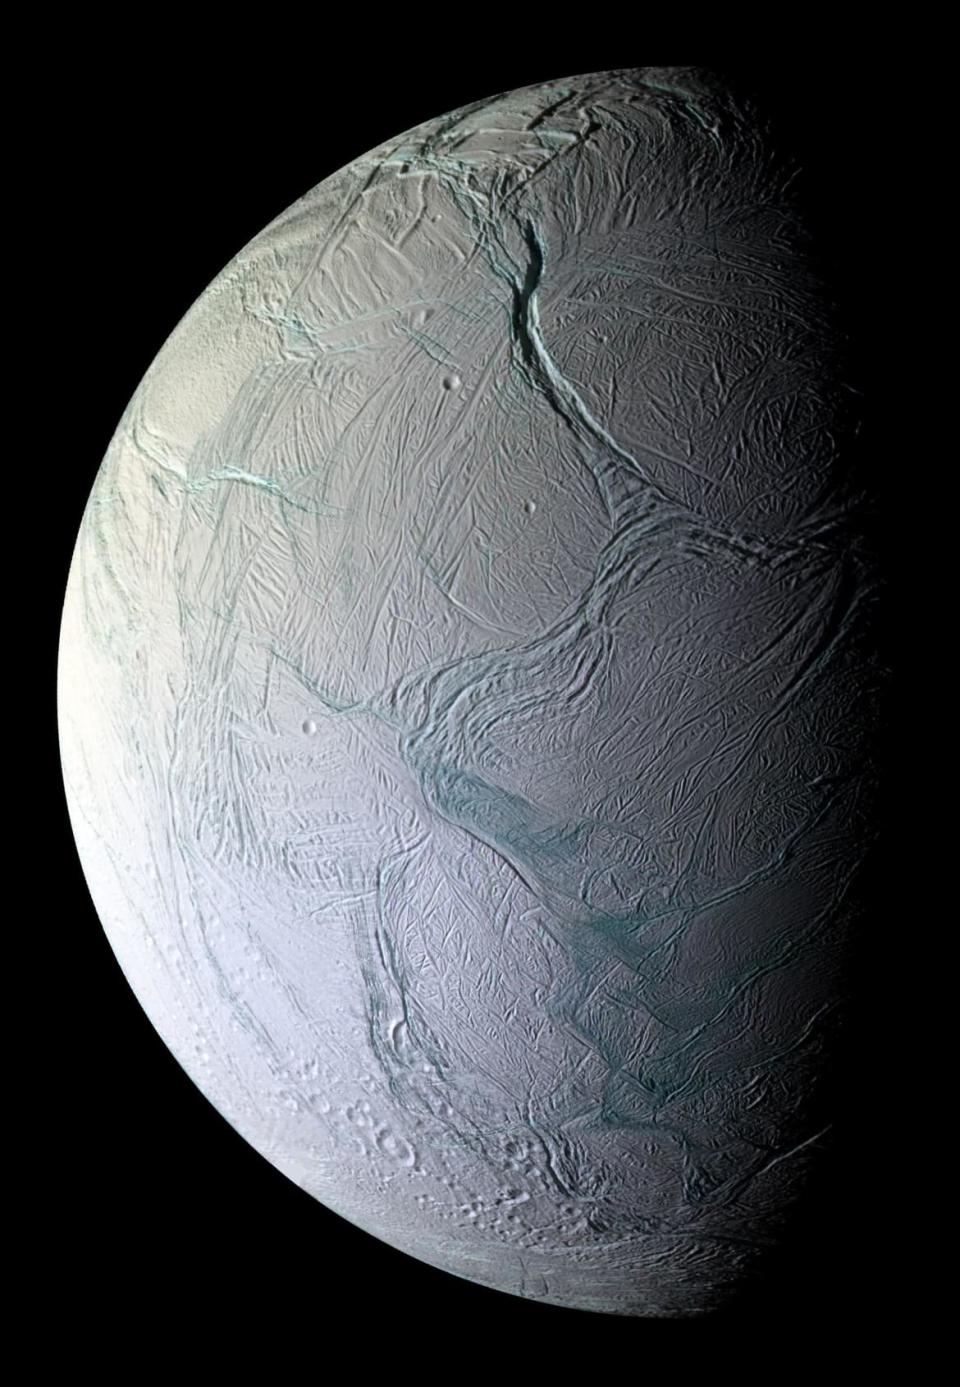 <div class="inline-image__caption"><p>A view of Enceladus captured by NASA's Cassini probe. </p></div> <div class="inline-image__credit">NASA/JPL/Space Science Institute</div>